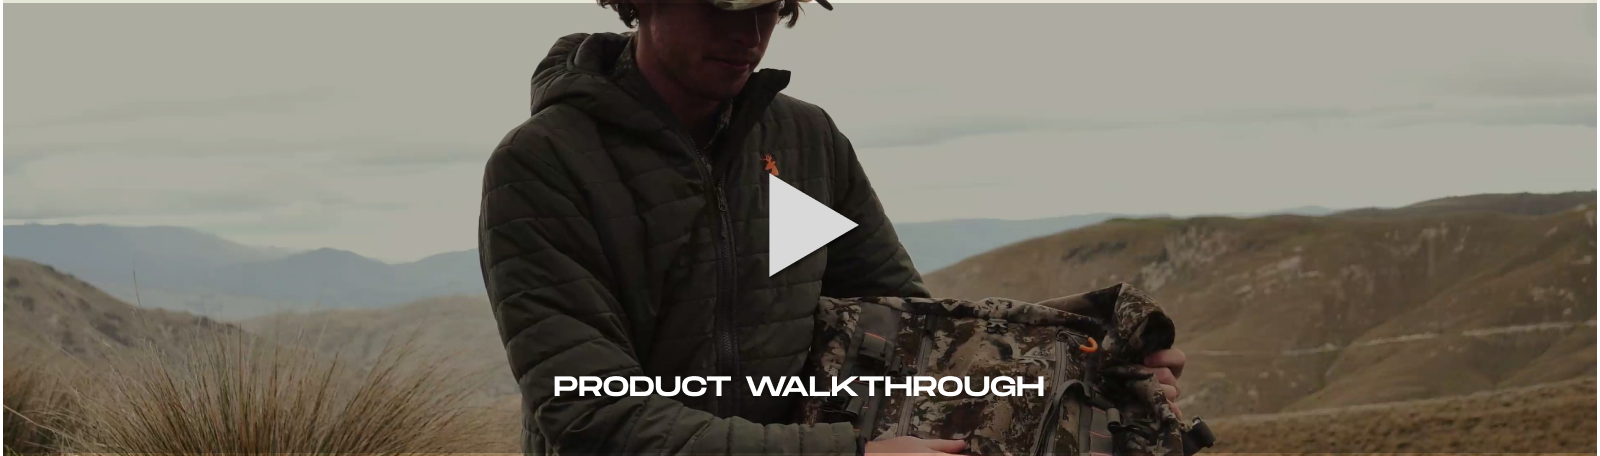 Spika Drover Product Walkthrough Video